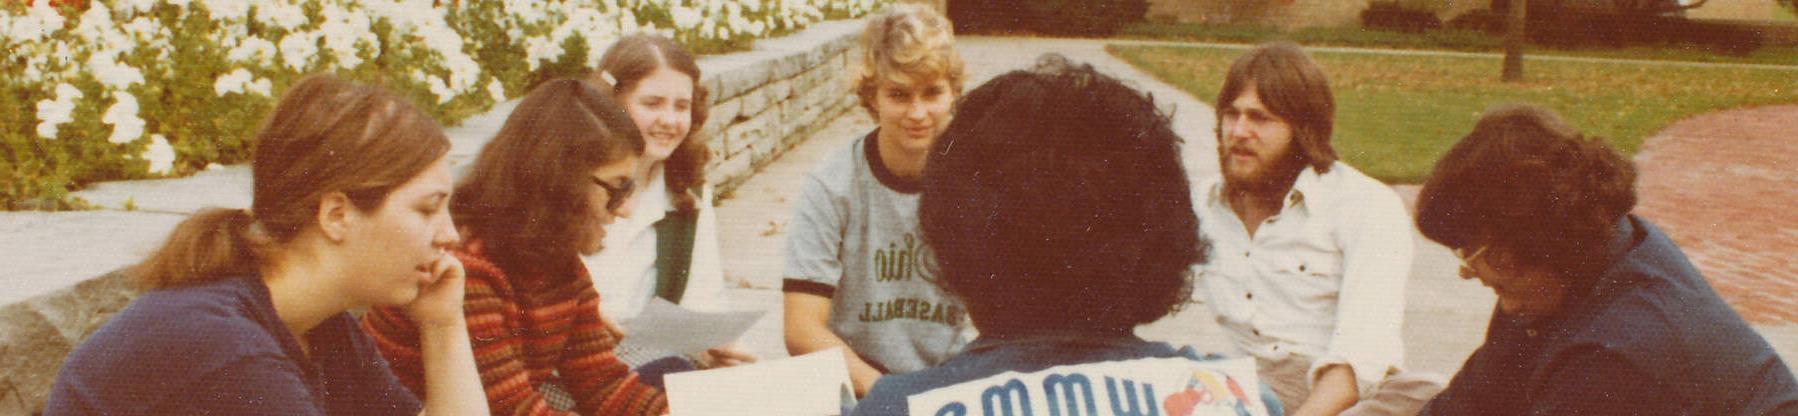 Vintage photo of ursuline college students on the quad